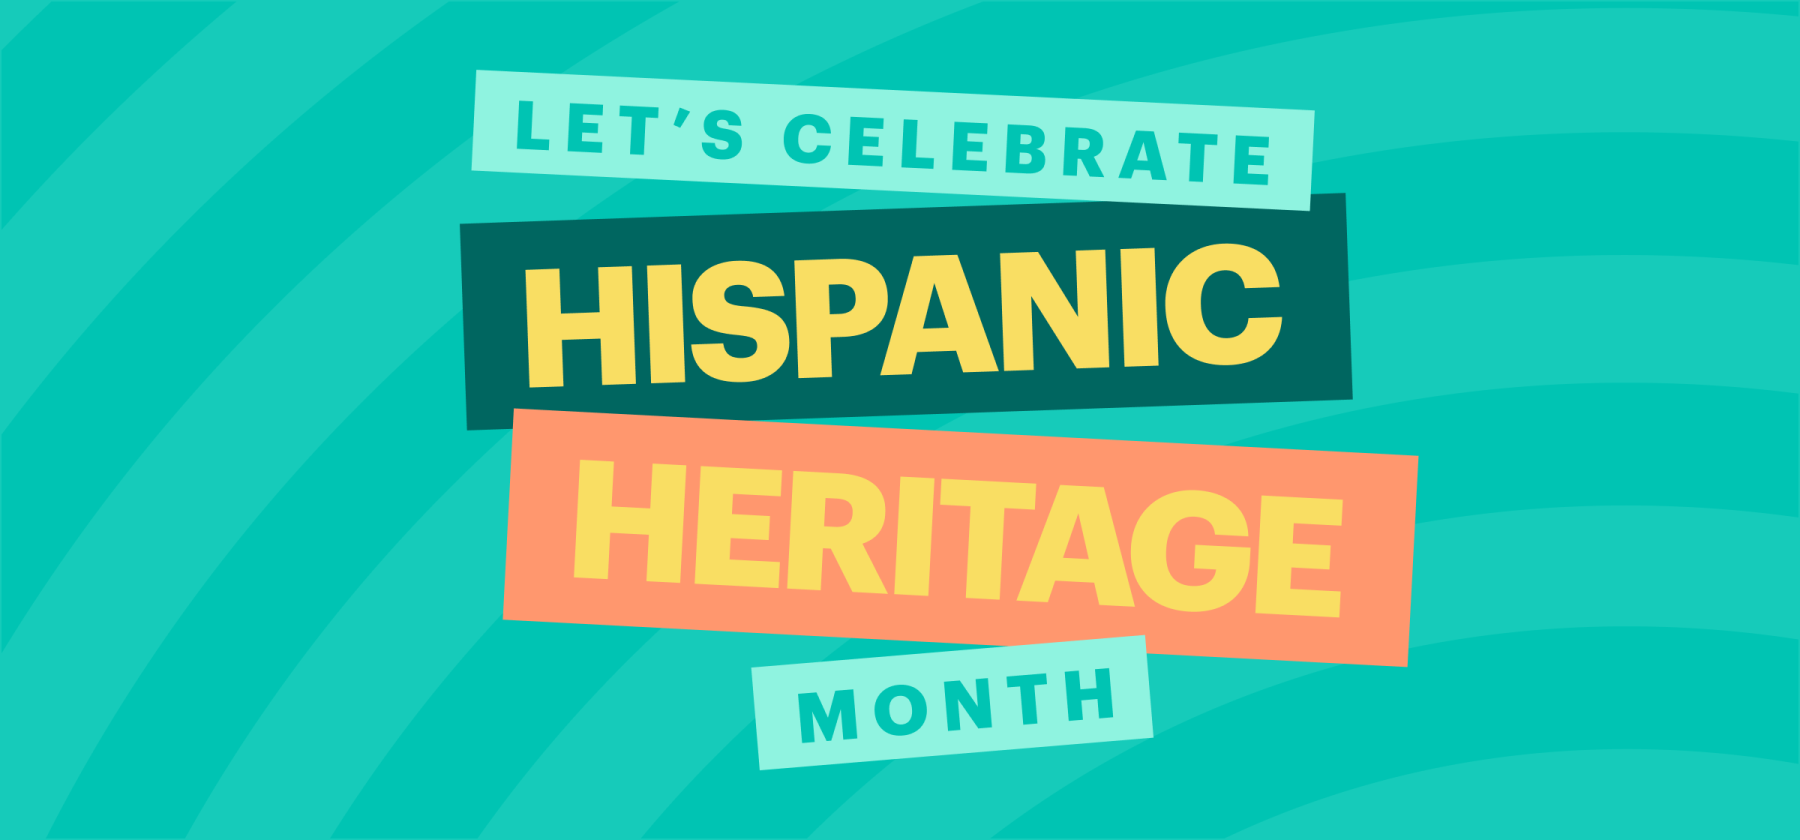 Let's Celebrate Hispanic Heritage Month